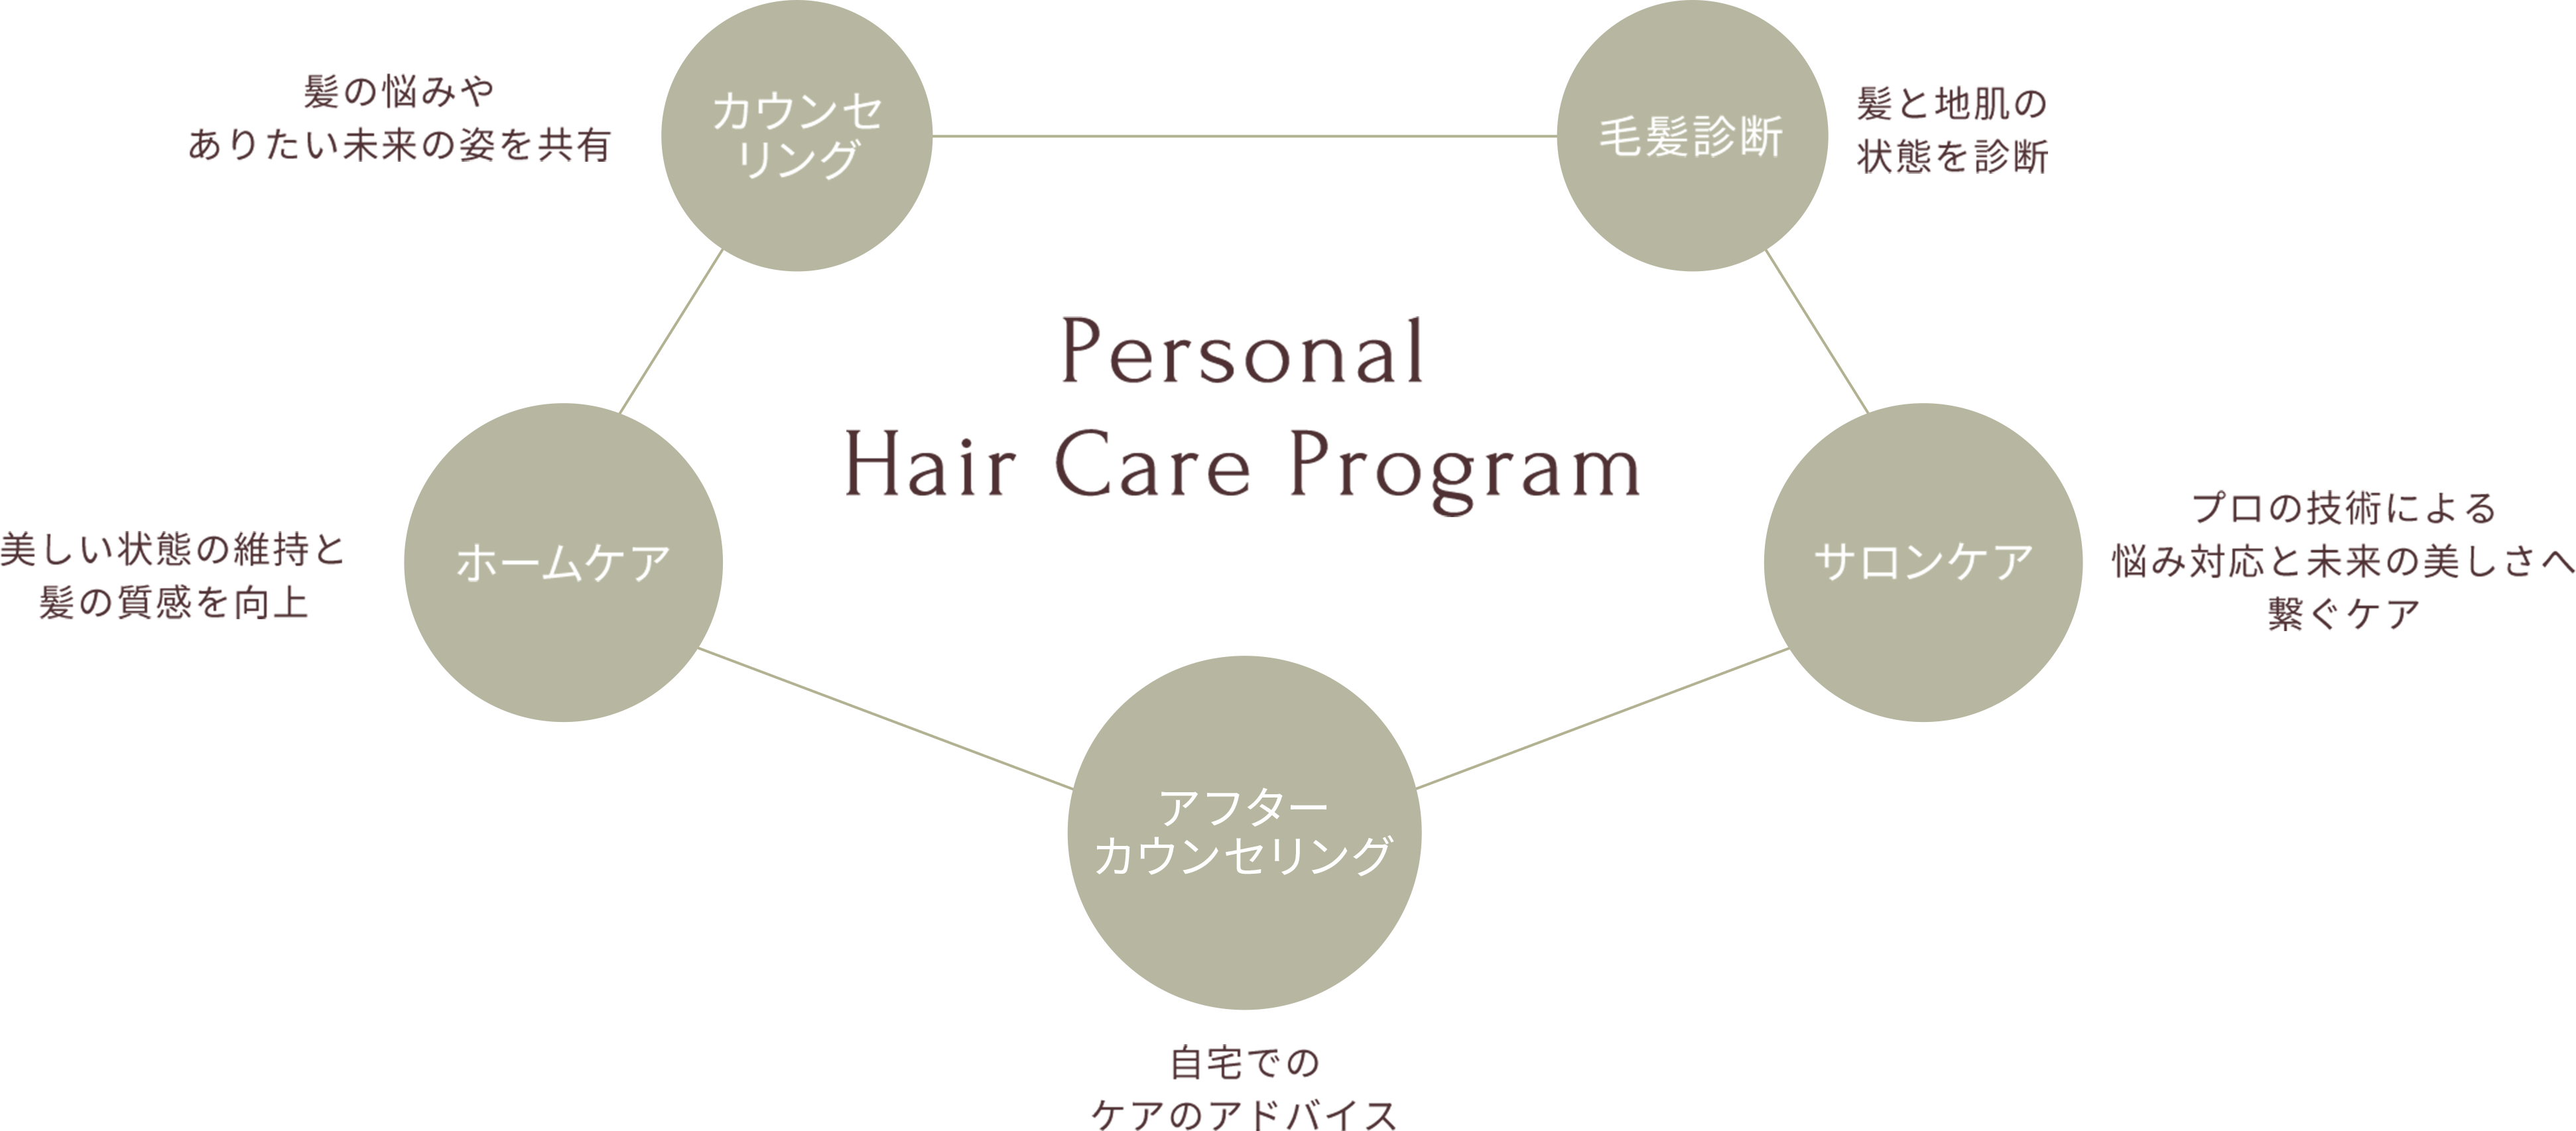 Personal Hair Care Program